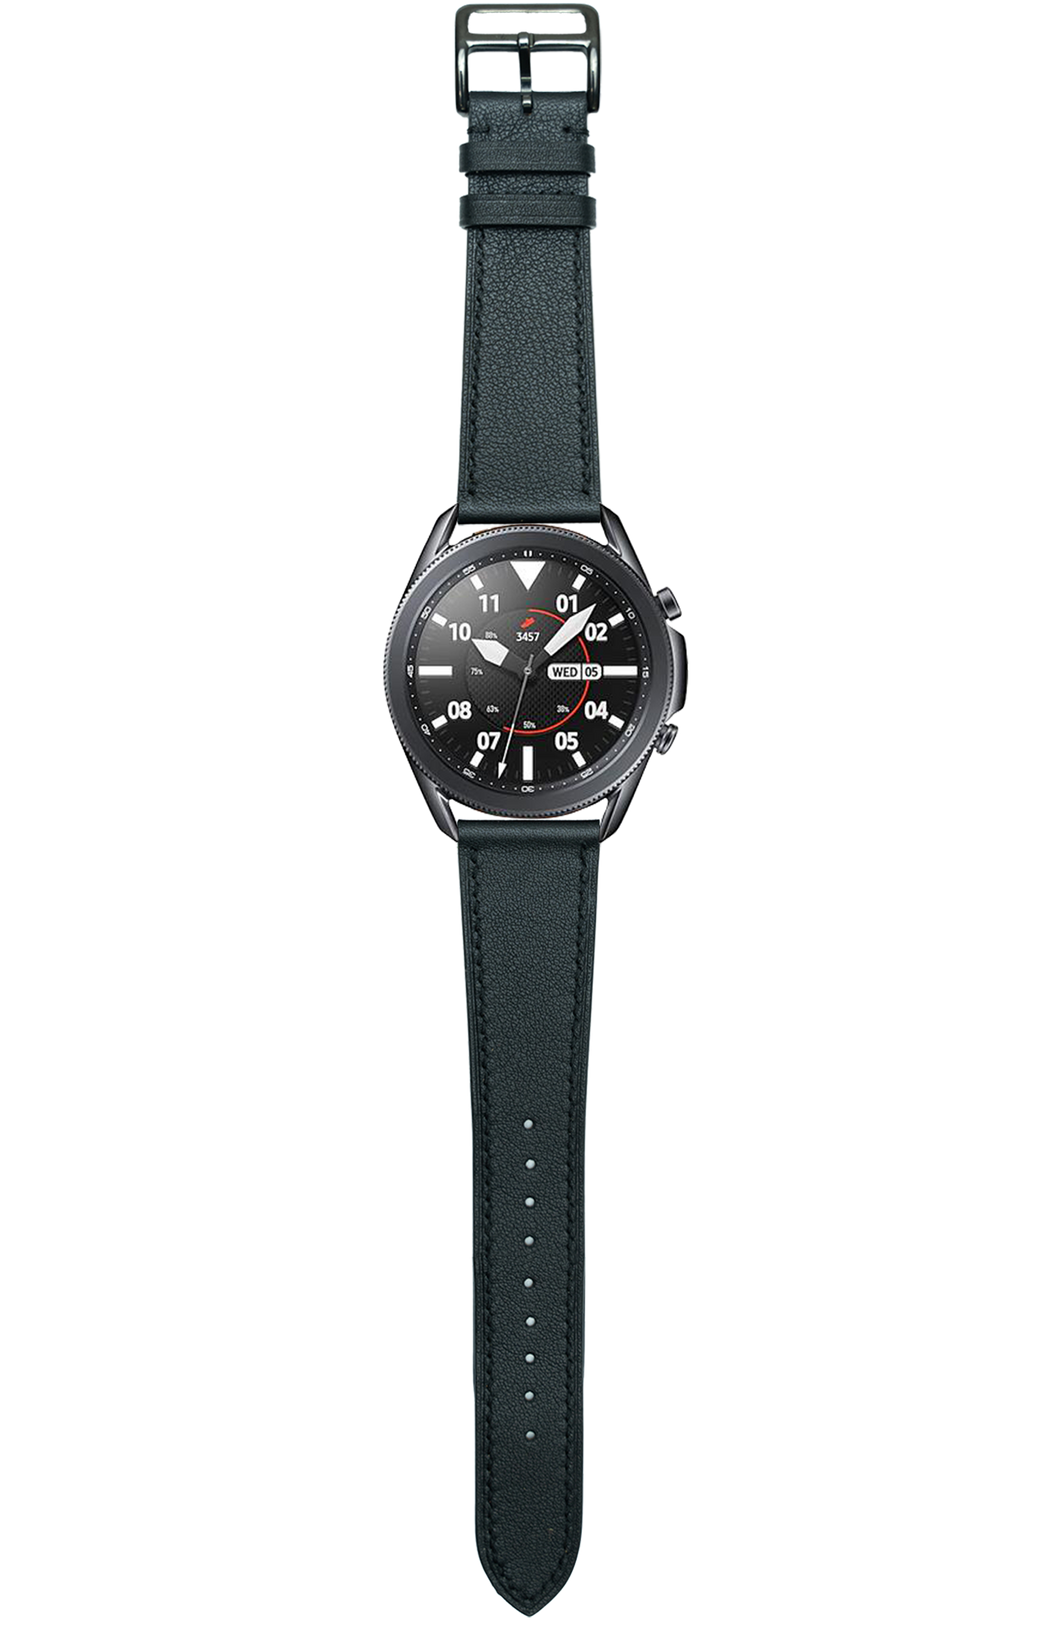 Samsung Galaxy Watch Strap - Black